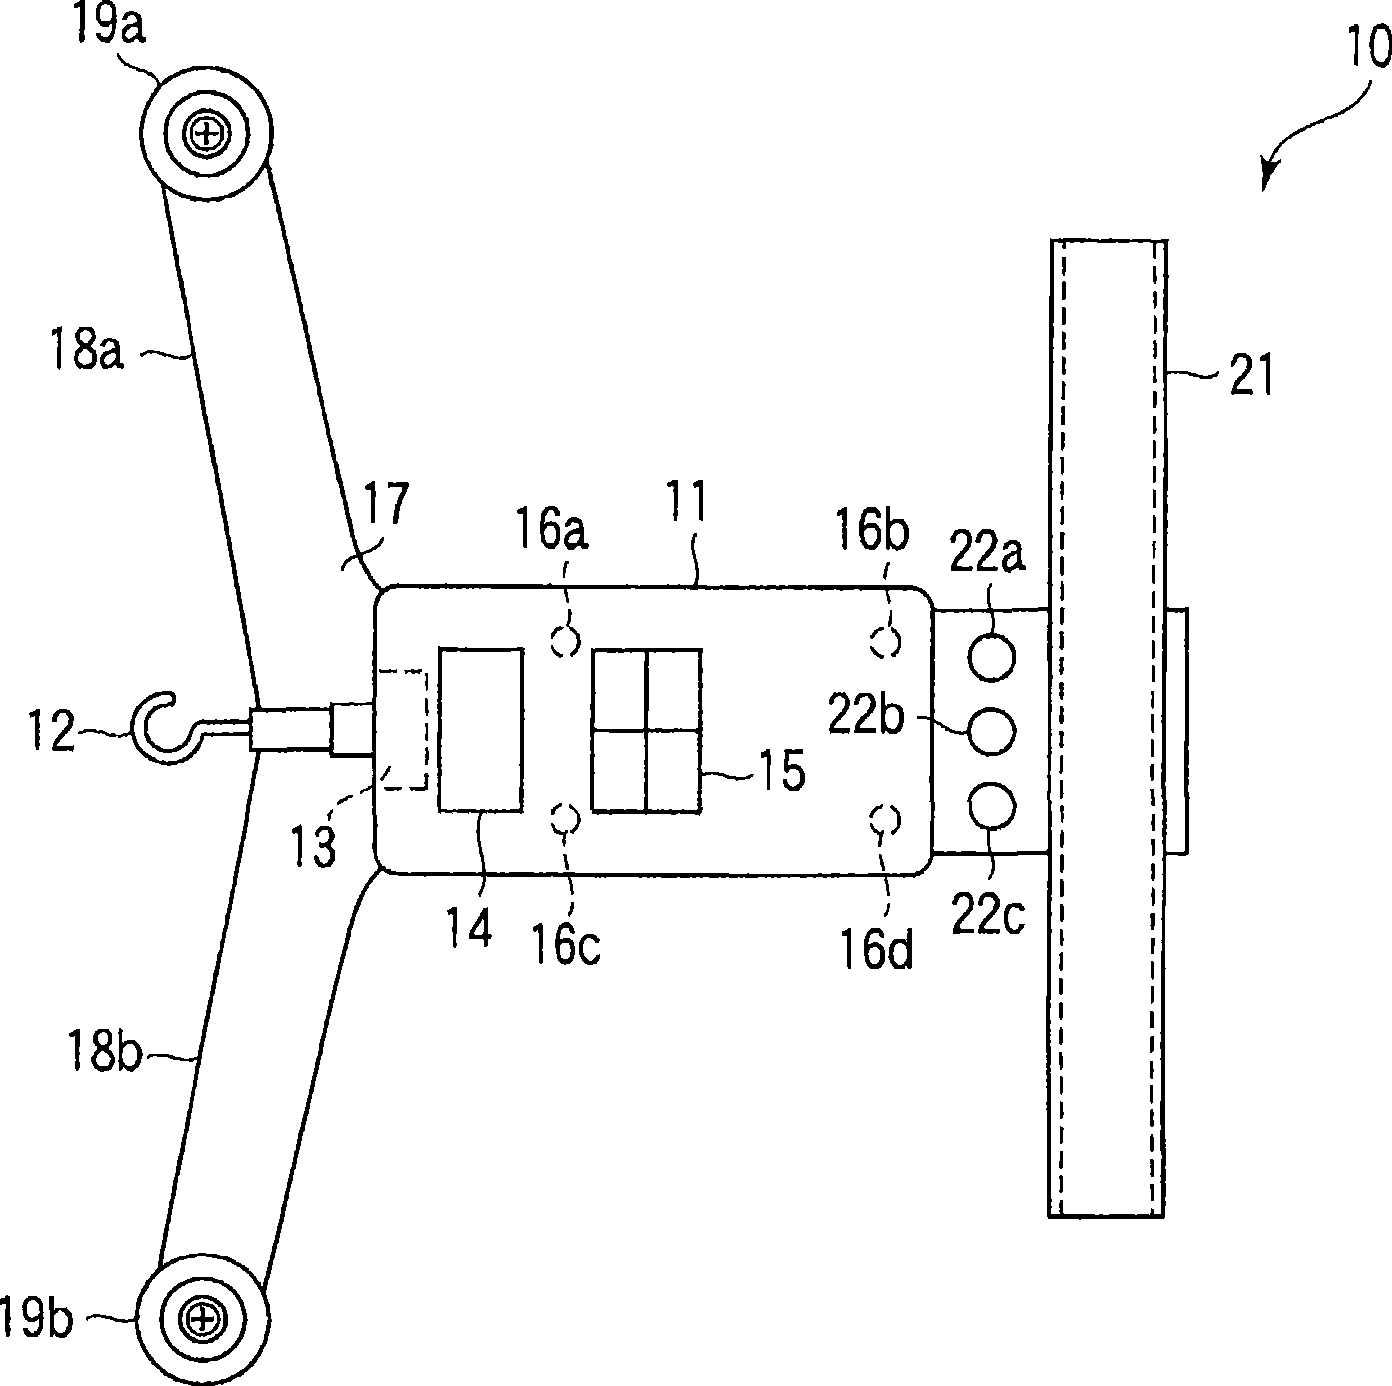 Cable tension determining apparatus